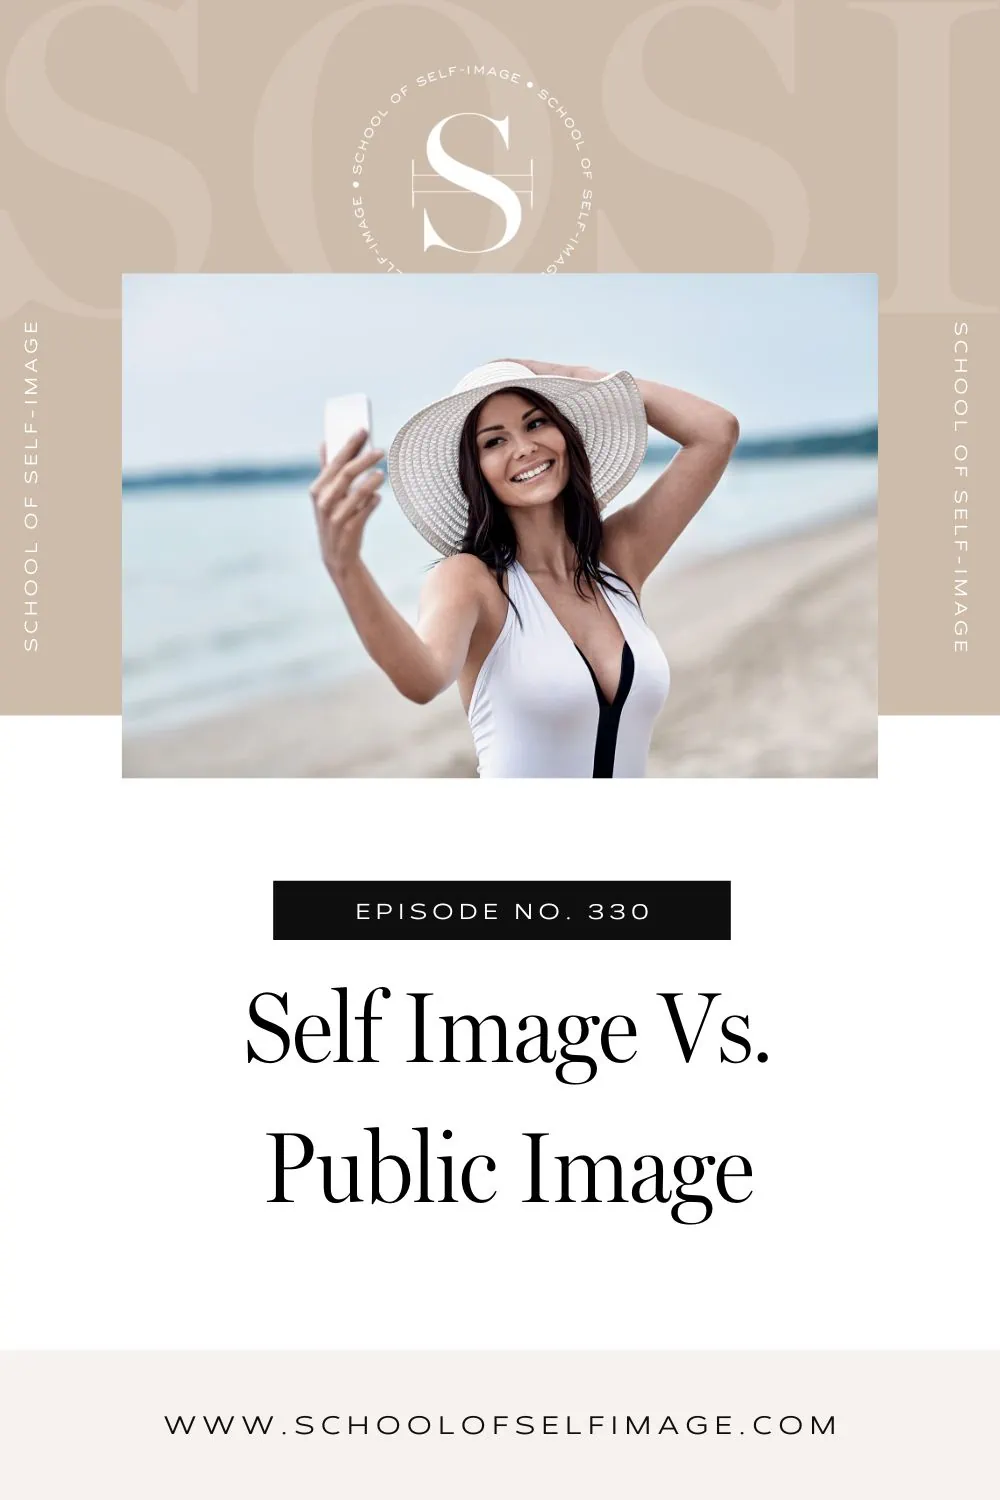 Self Image Vs. Public Image